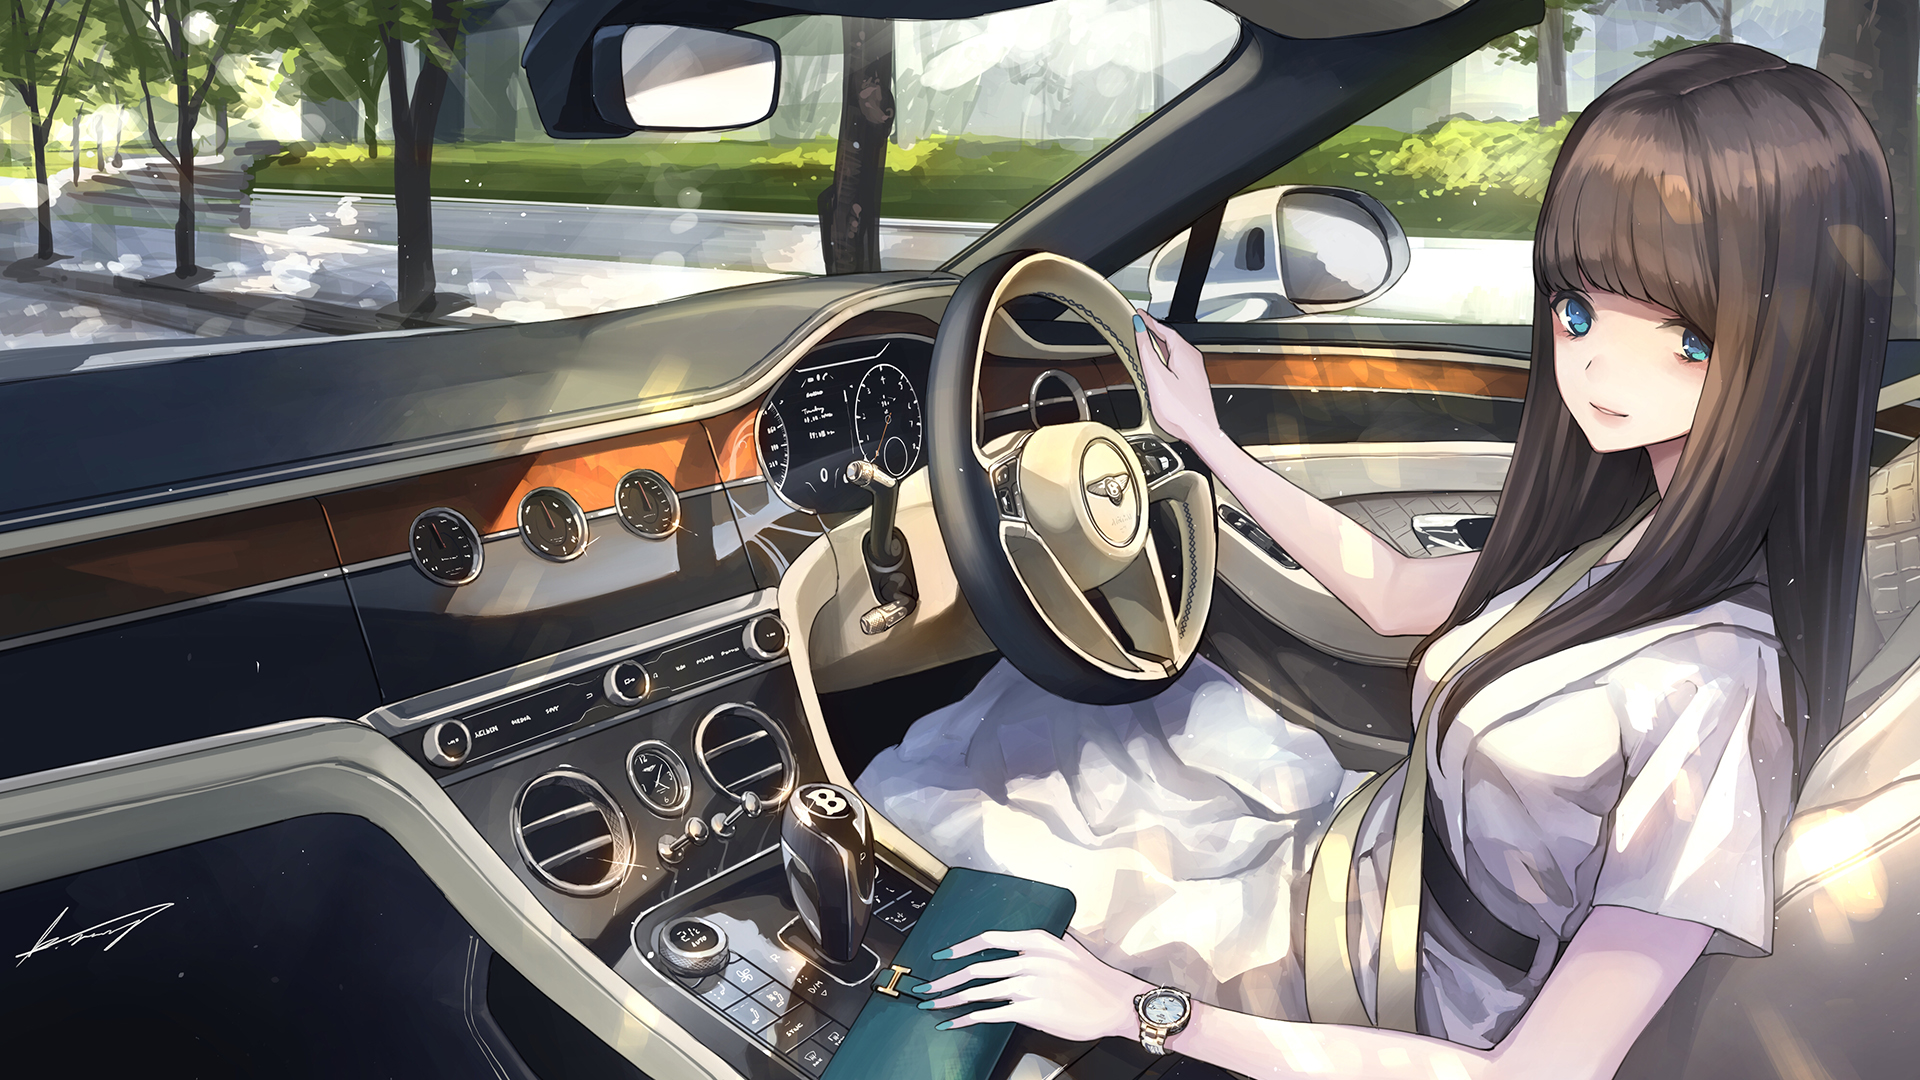 Anime 1920x1080 car brunette anime women driving luxury cars car interior